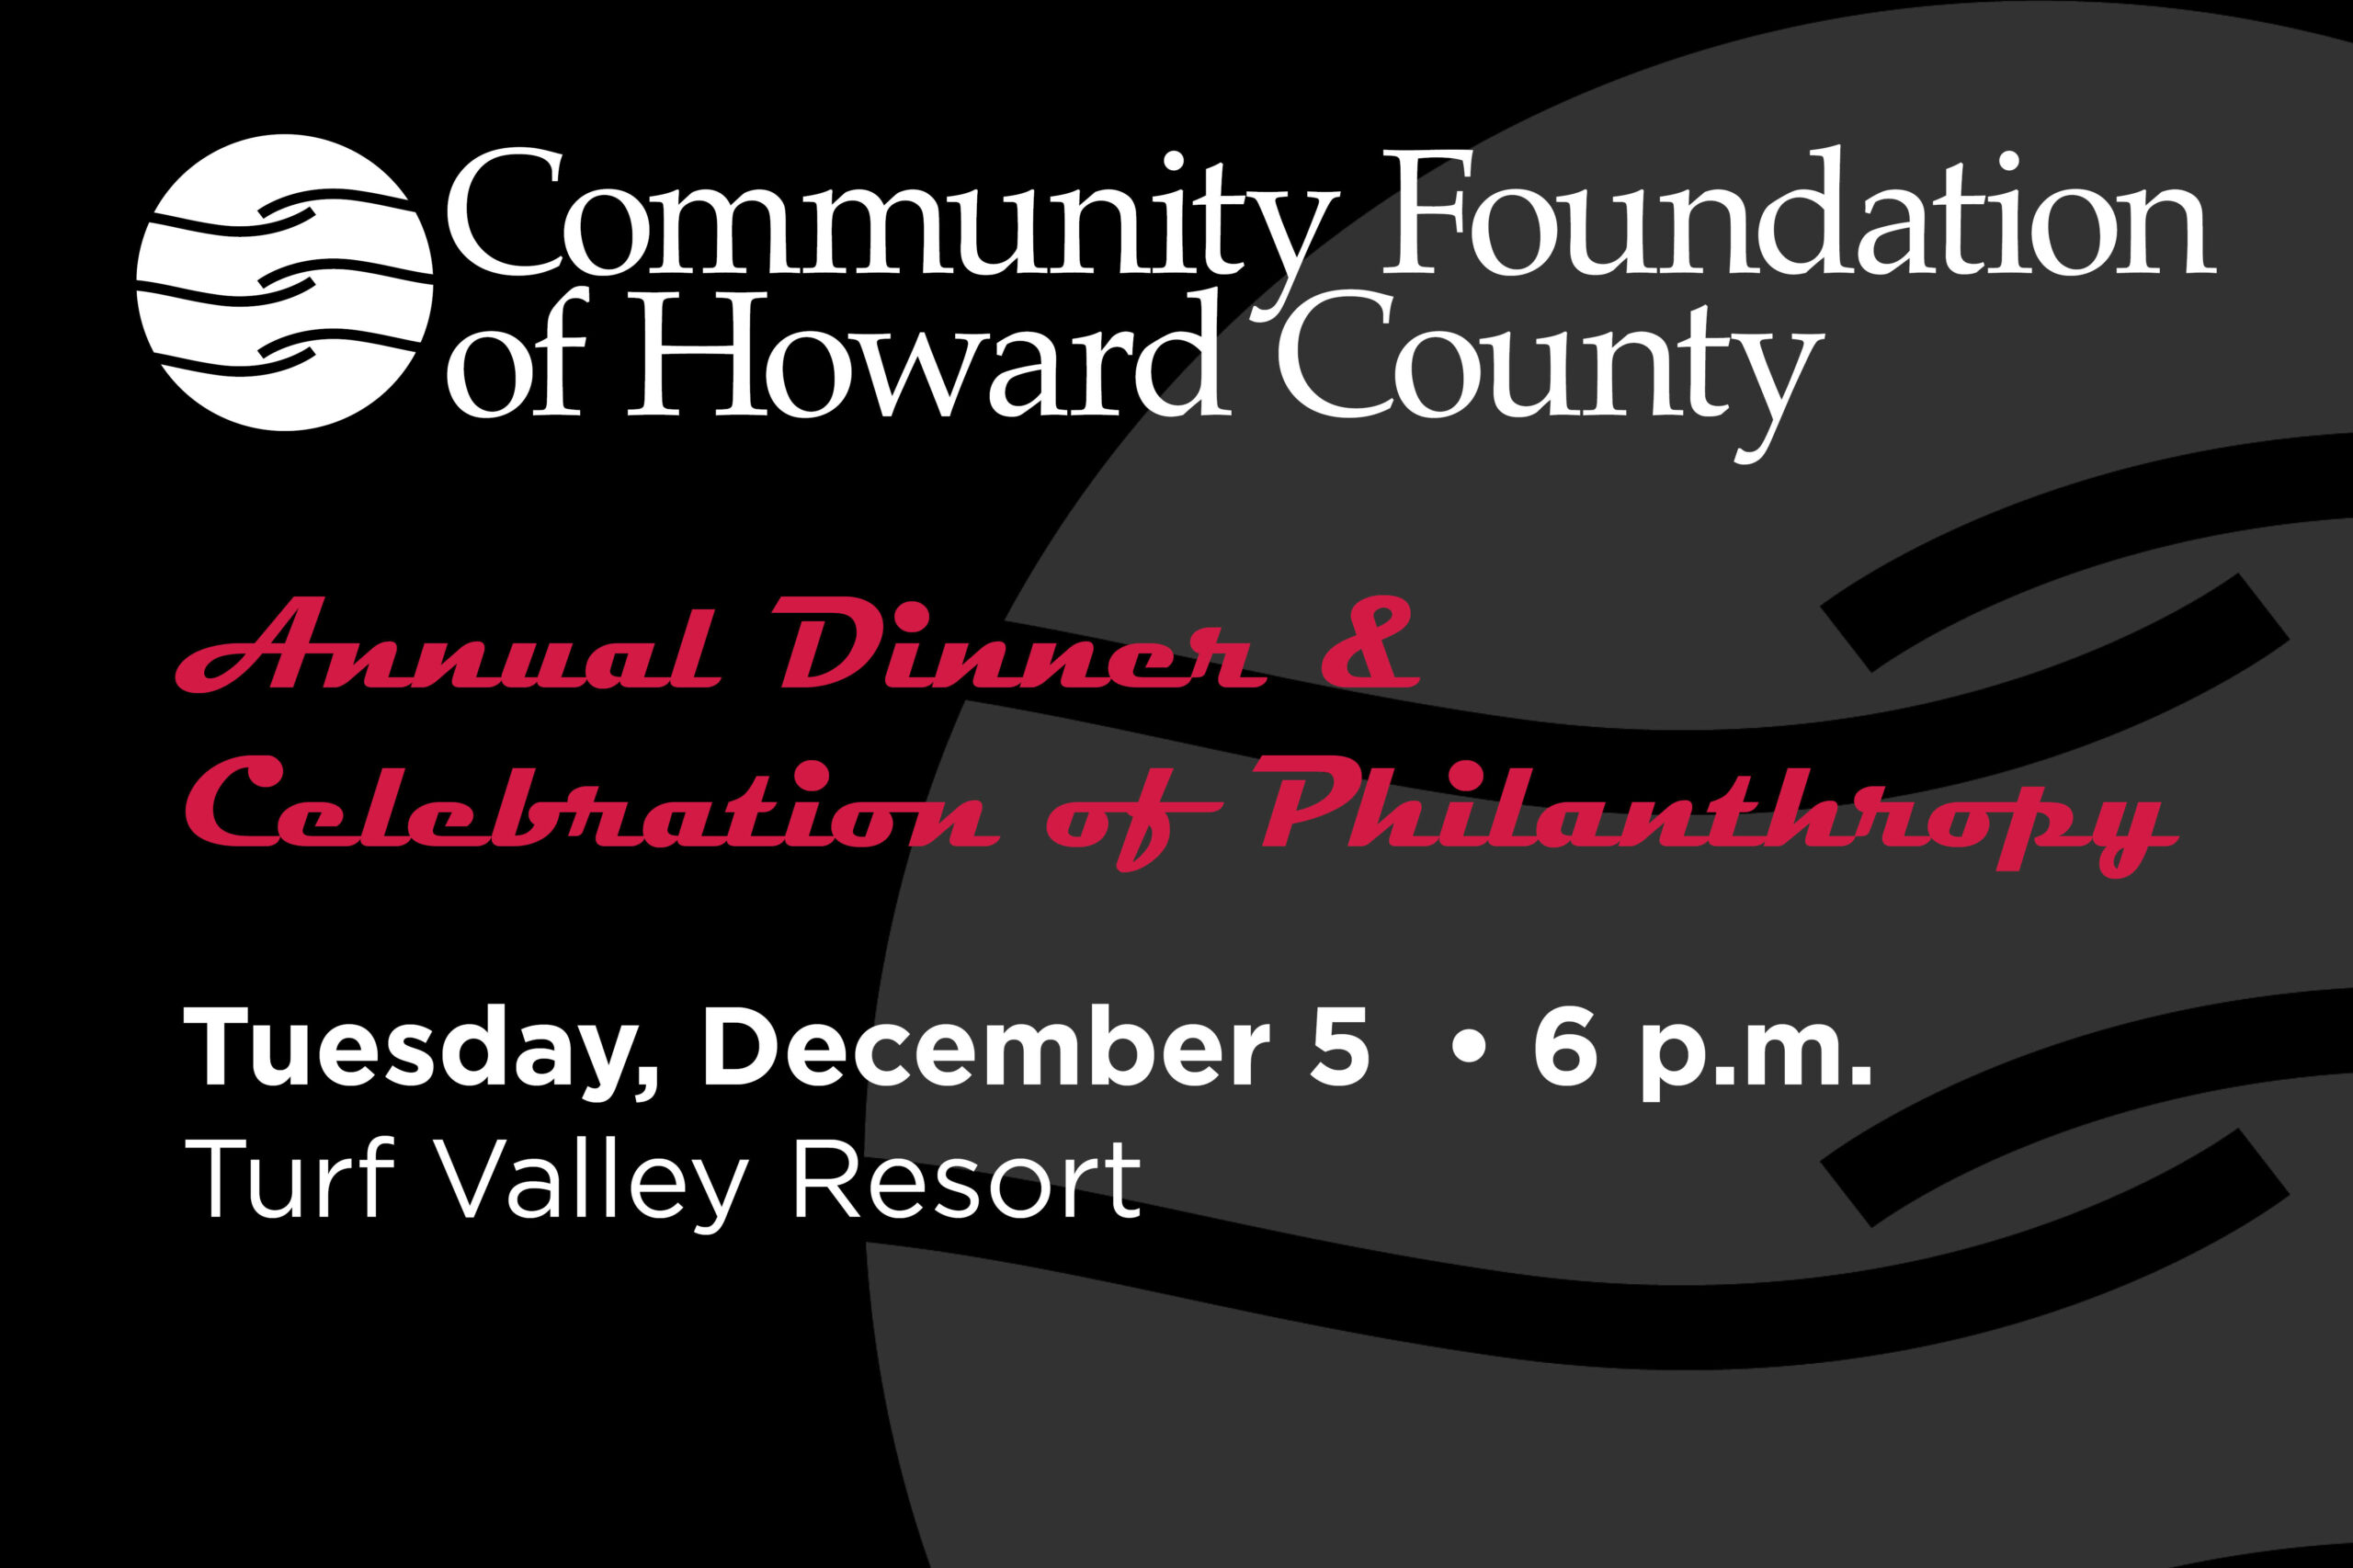 Annual Dinner & Celebration of Philanthropy Set for December 5